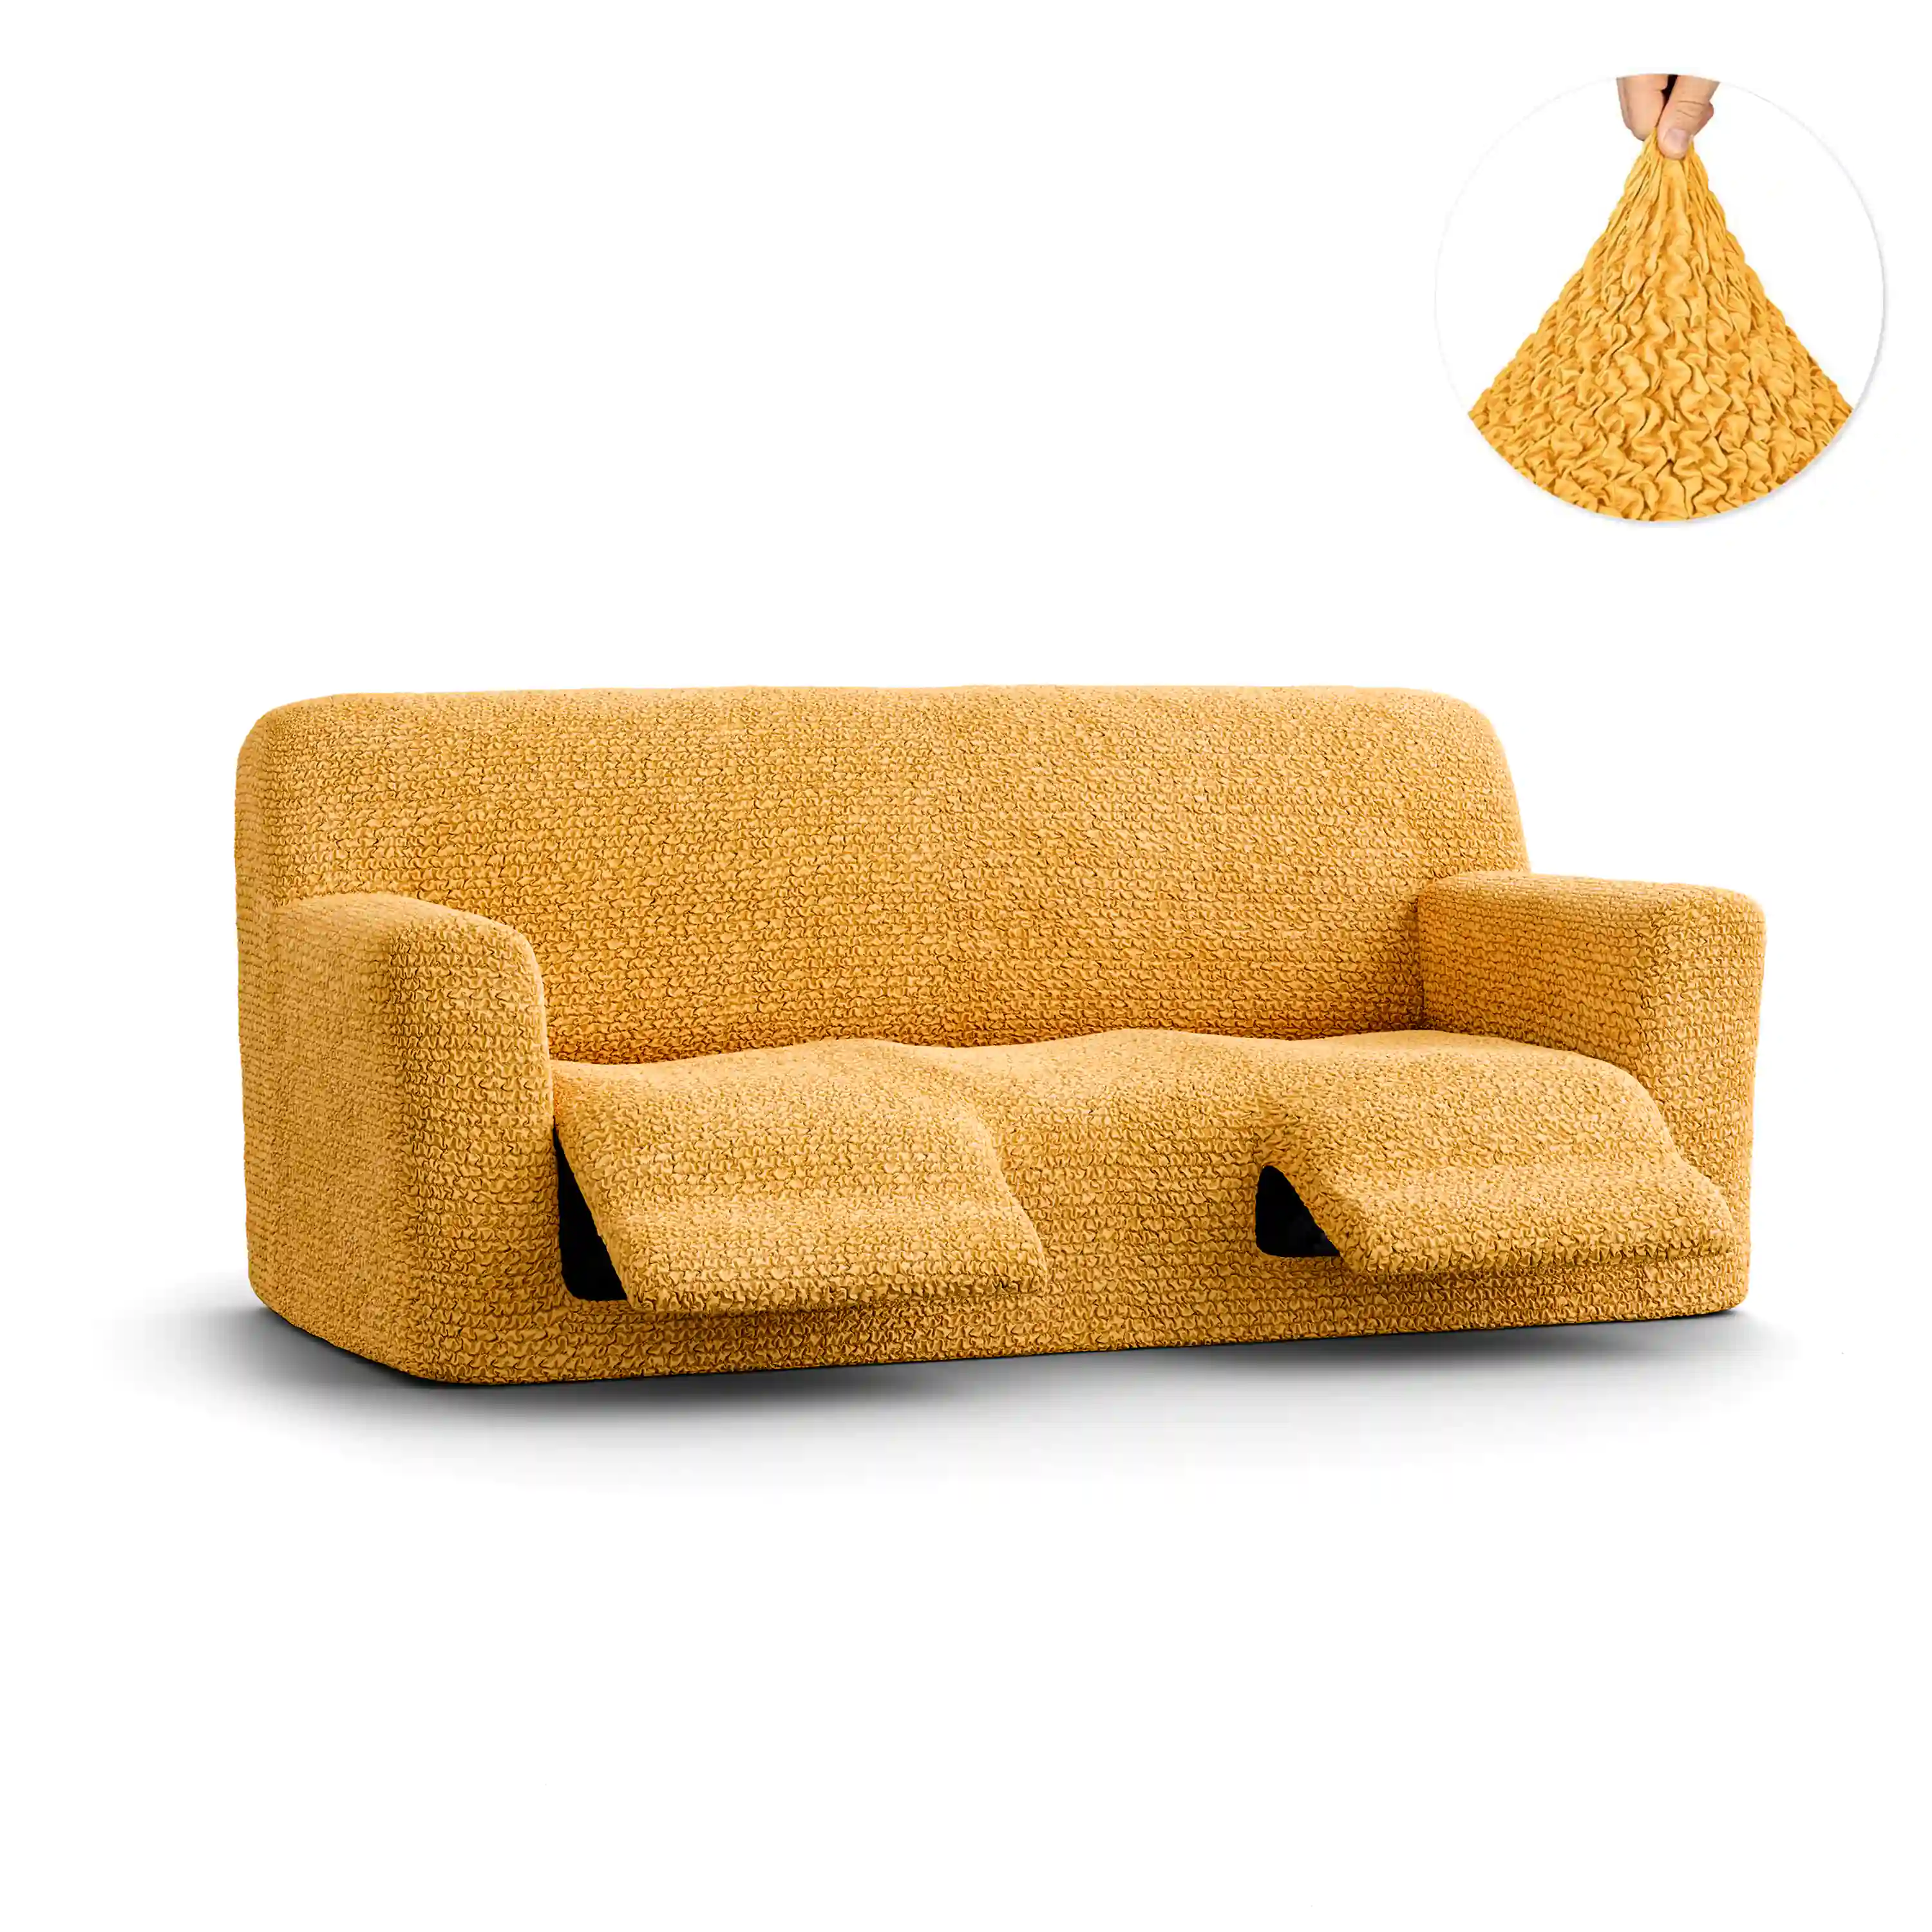 3 Seater Recliner Sofa Cover - Mango, Microfibra